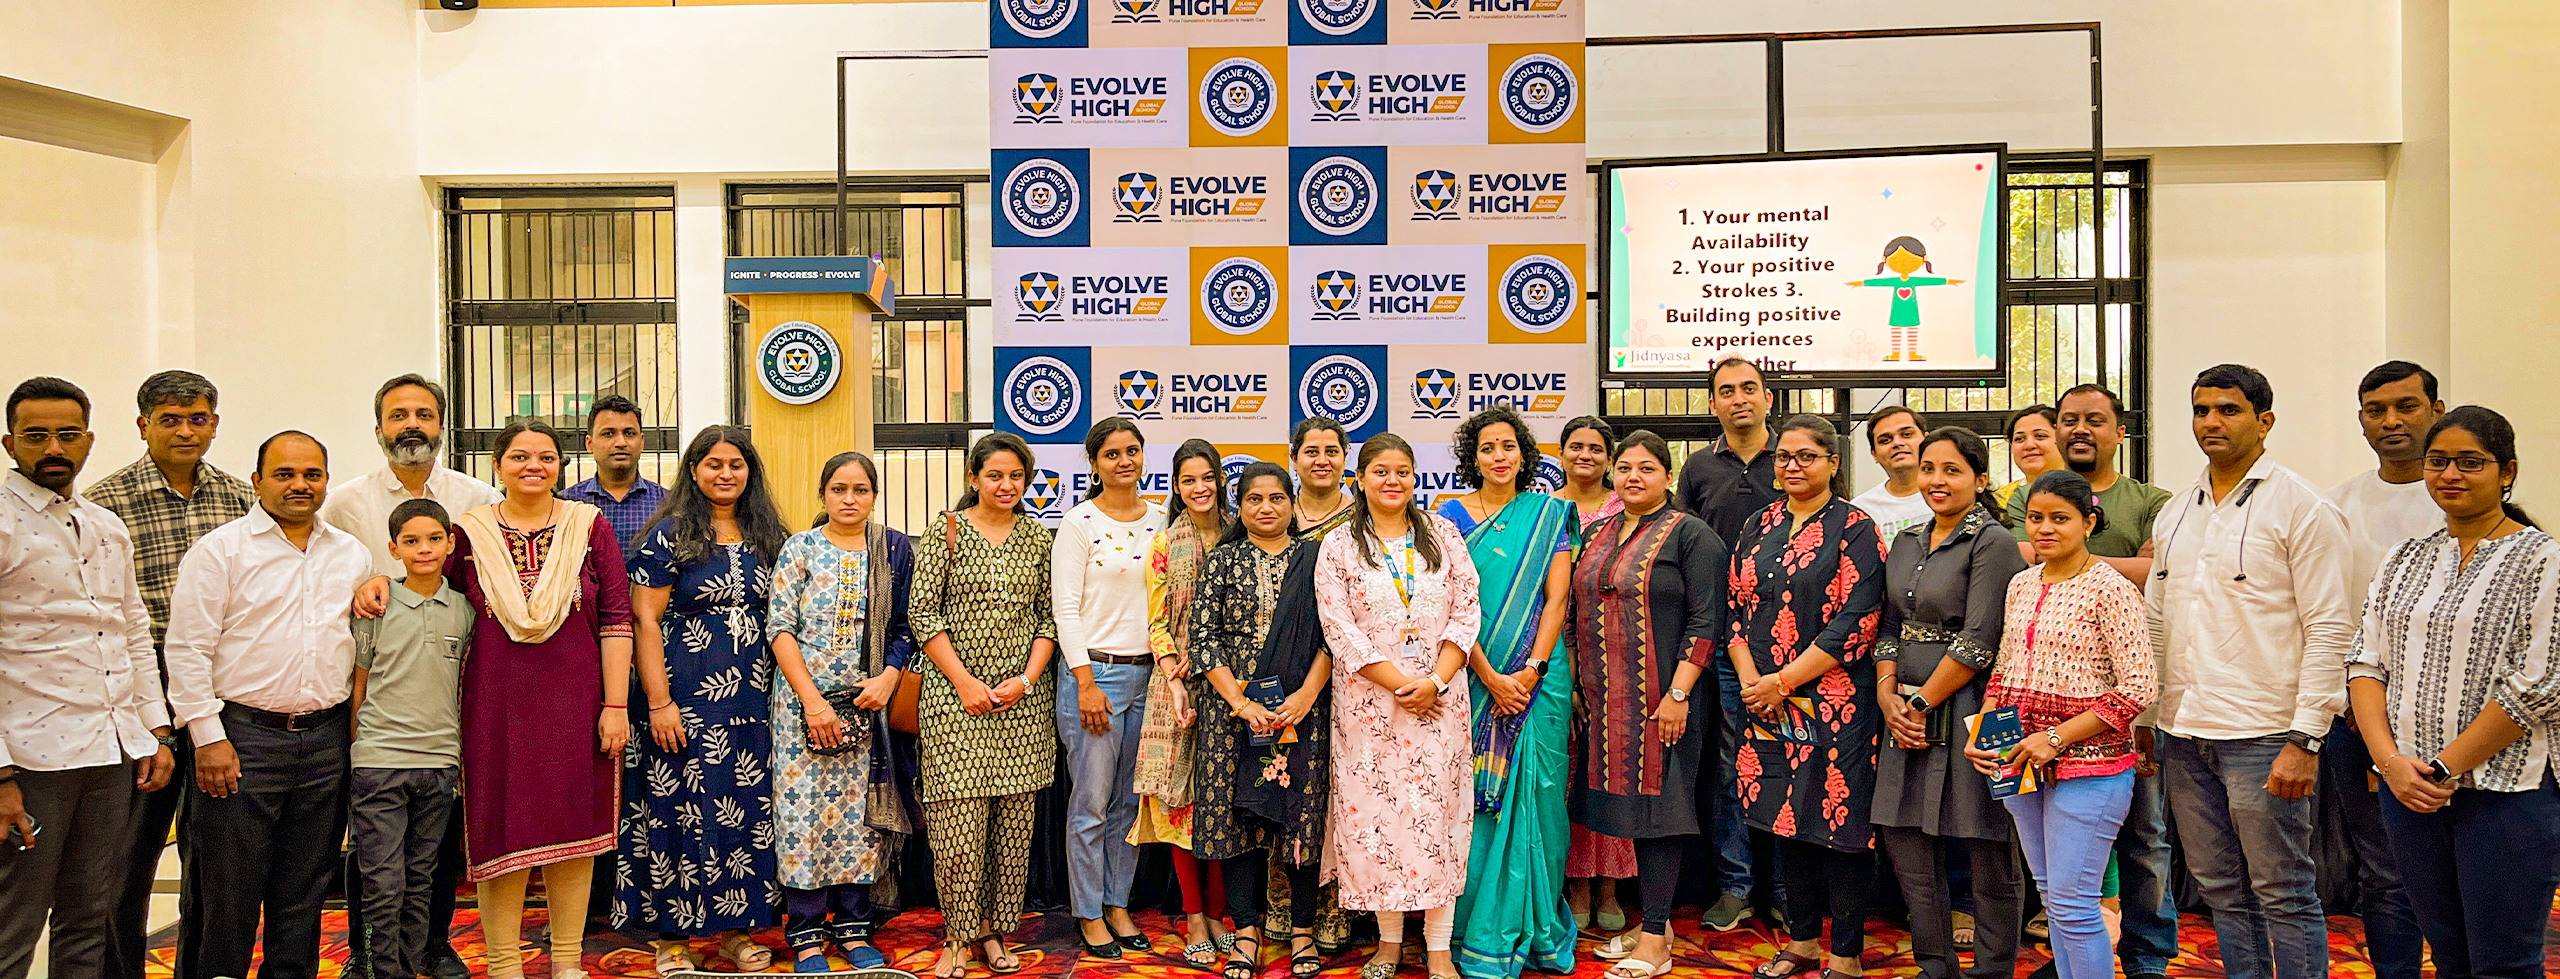 Evolve High - Event - Blog banner - Pune CBSE school